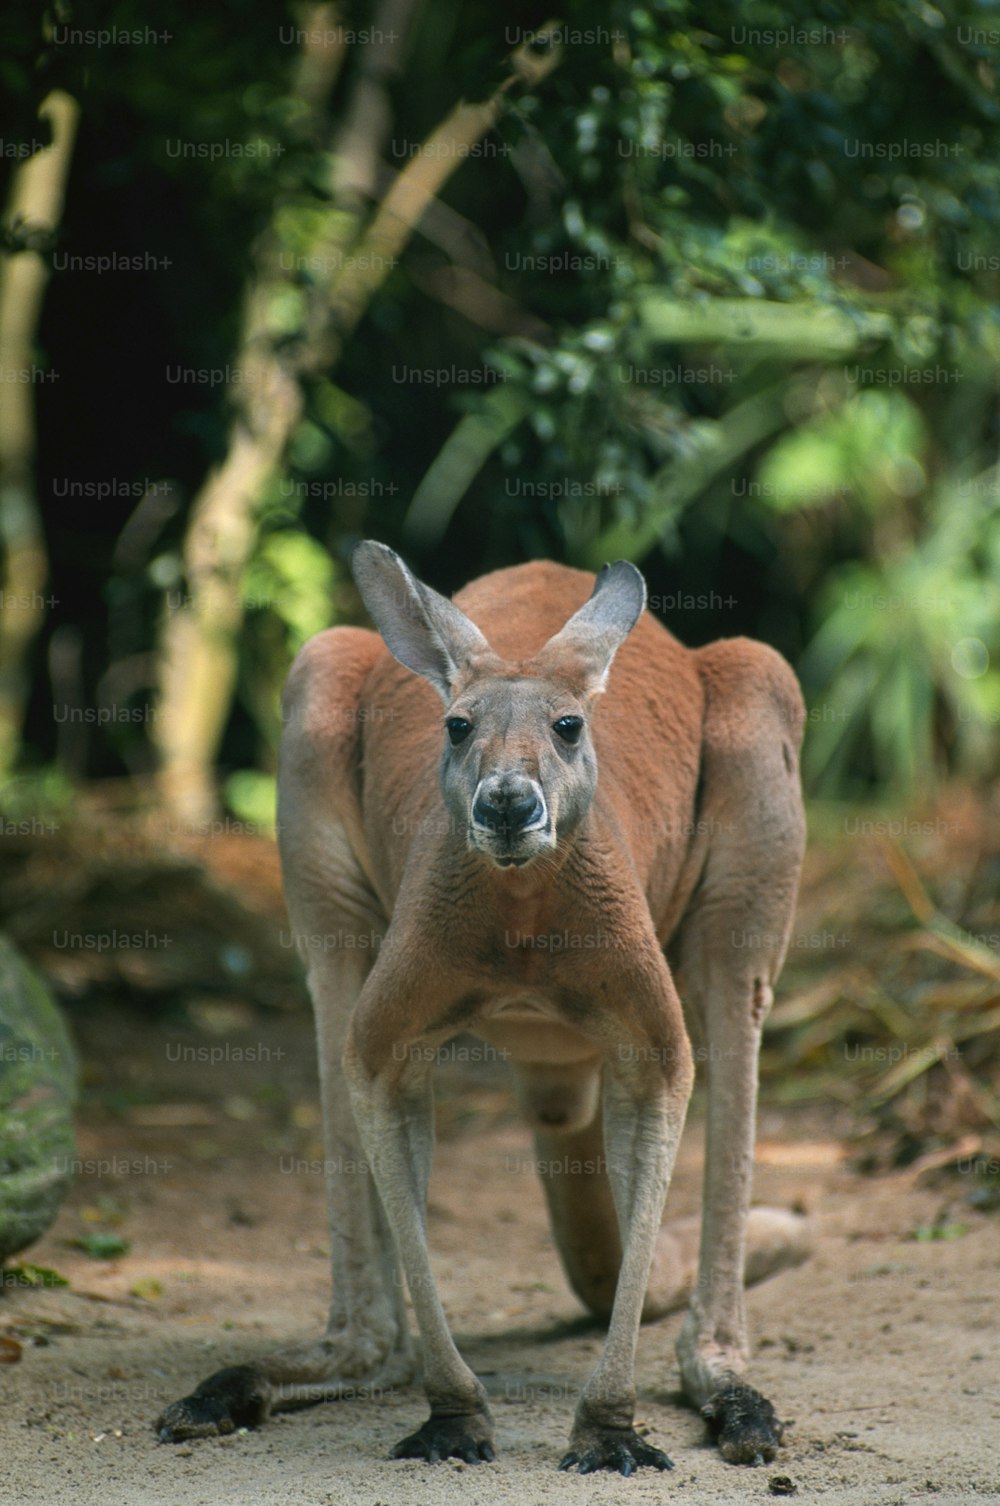 Gros plan d’un kangourou sur un chemin de terre